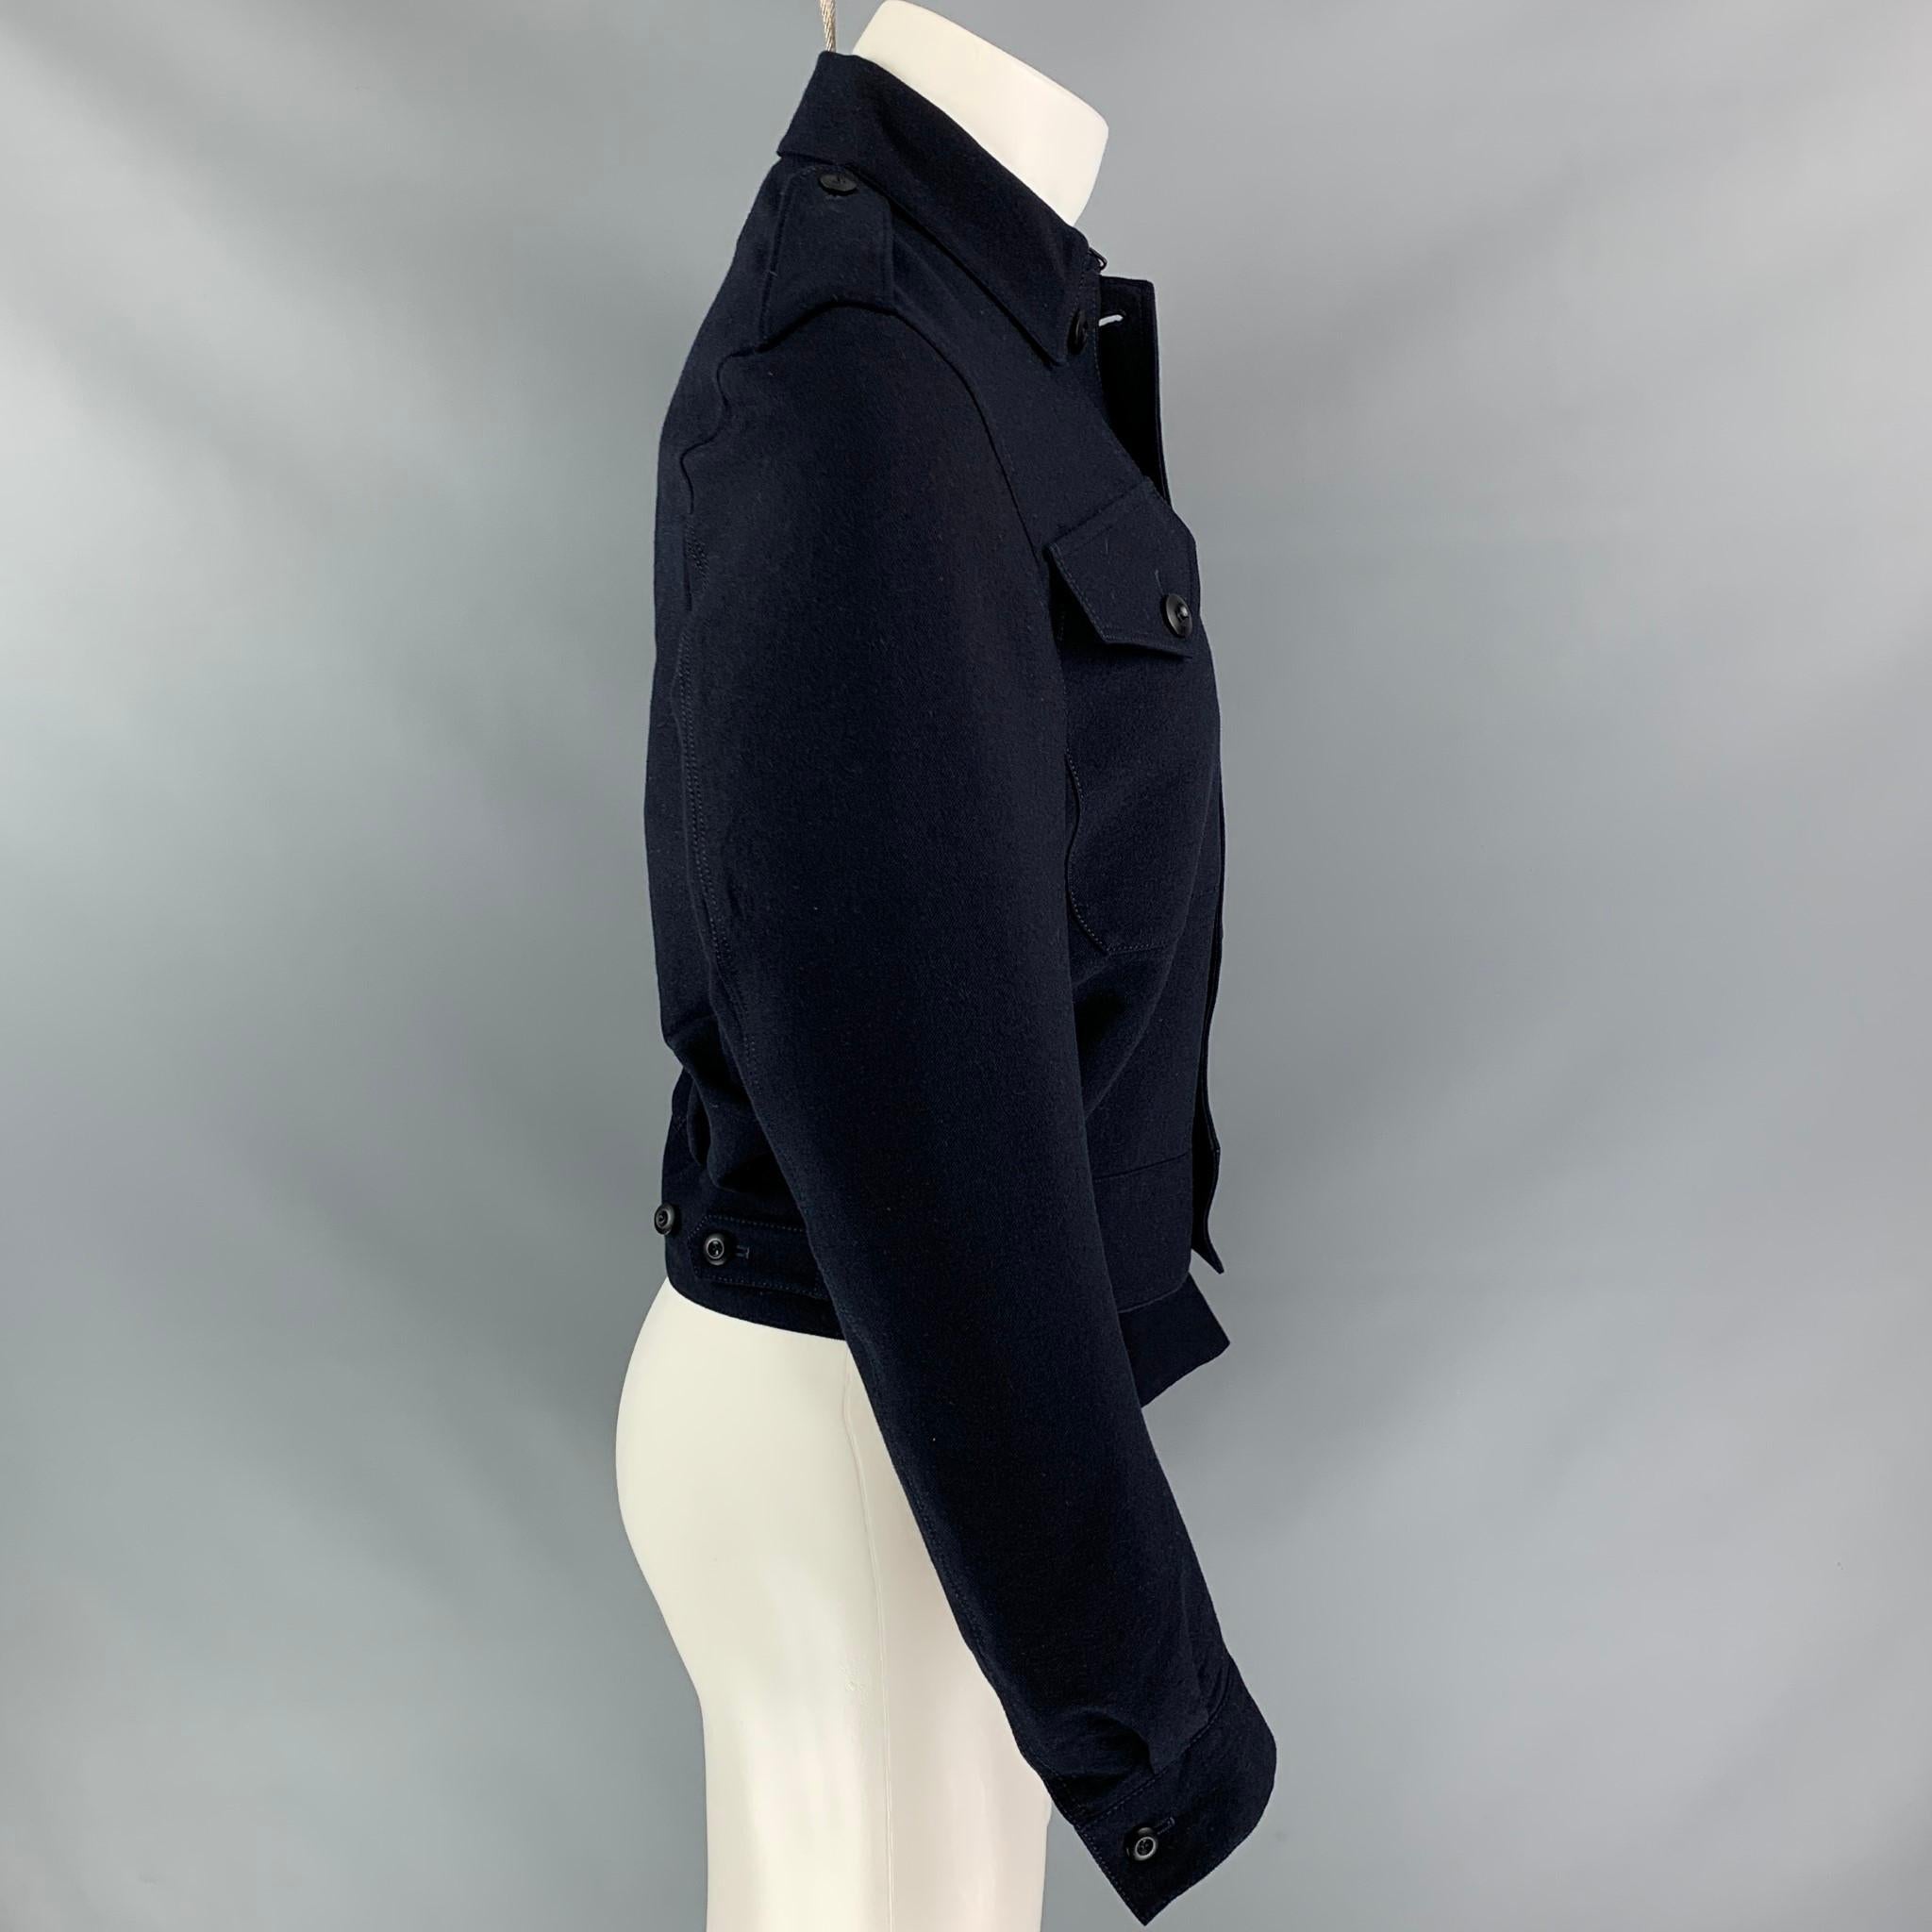 Black BURBERRY PRORSUM Spring 2015 Size 38 Navy Blue Cashmere Blend Jacket